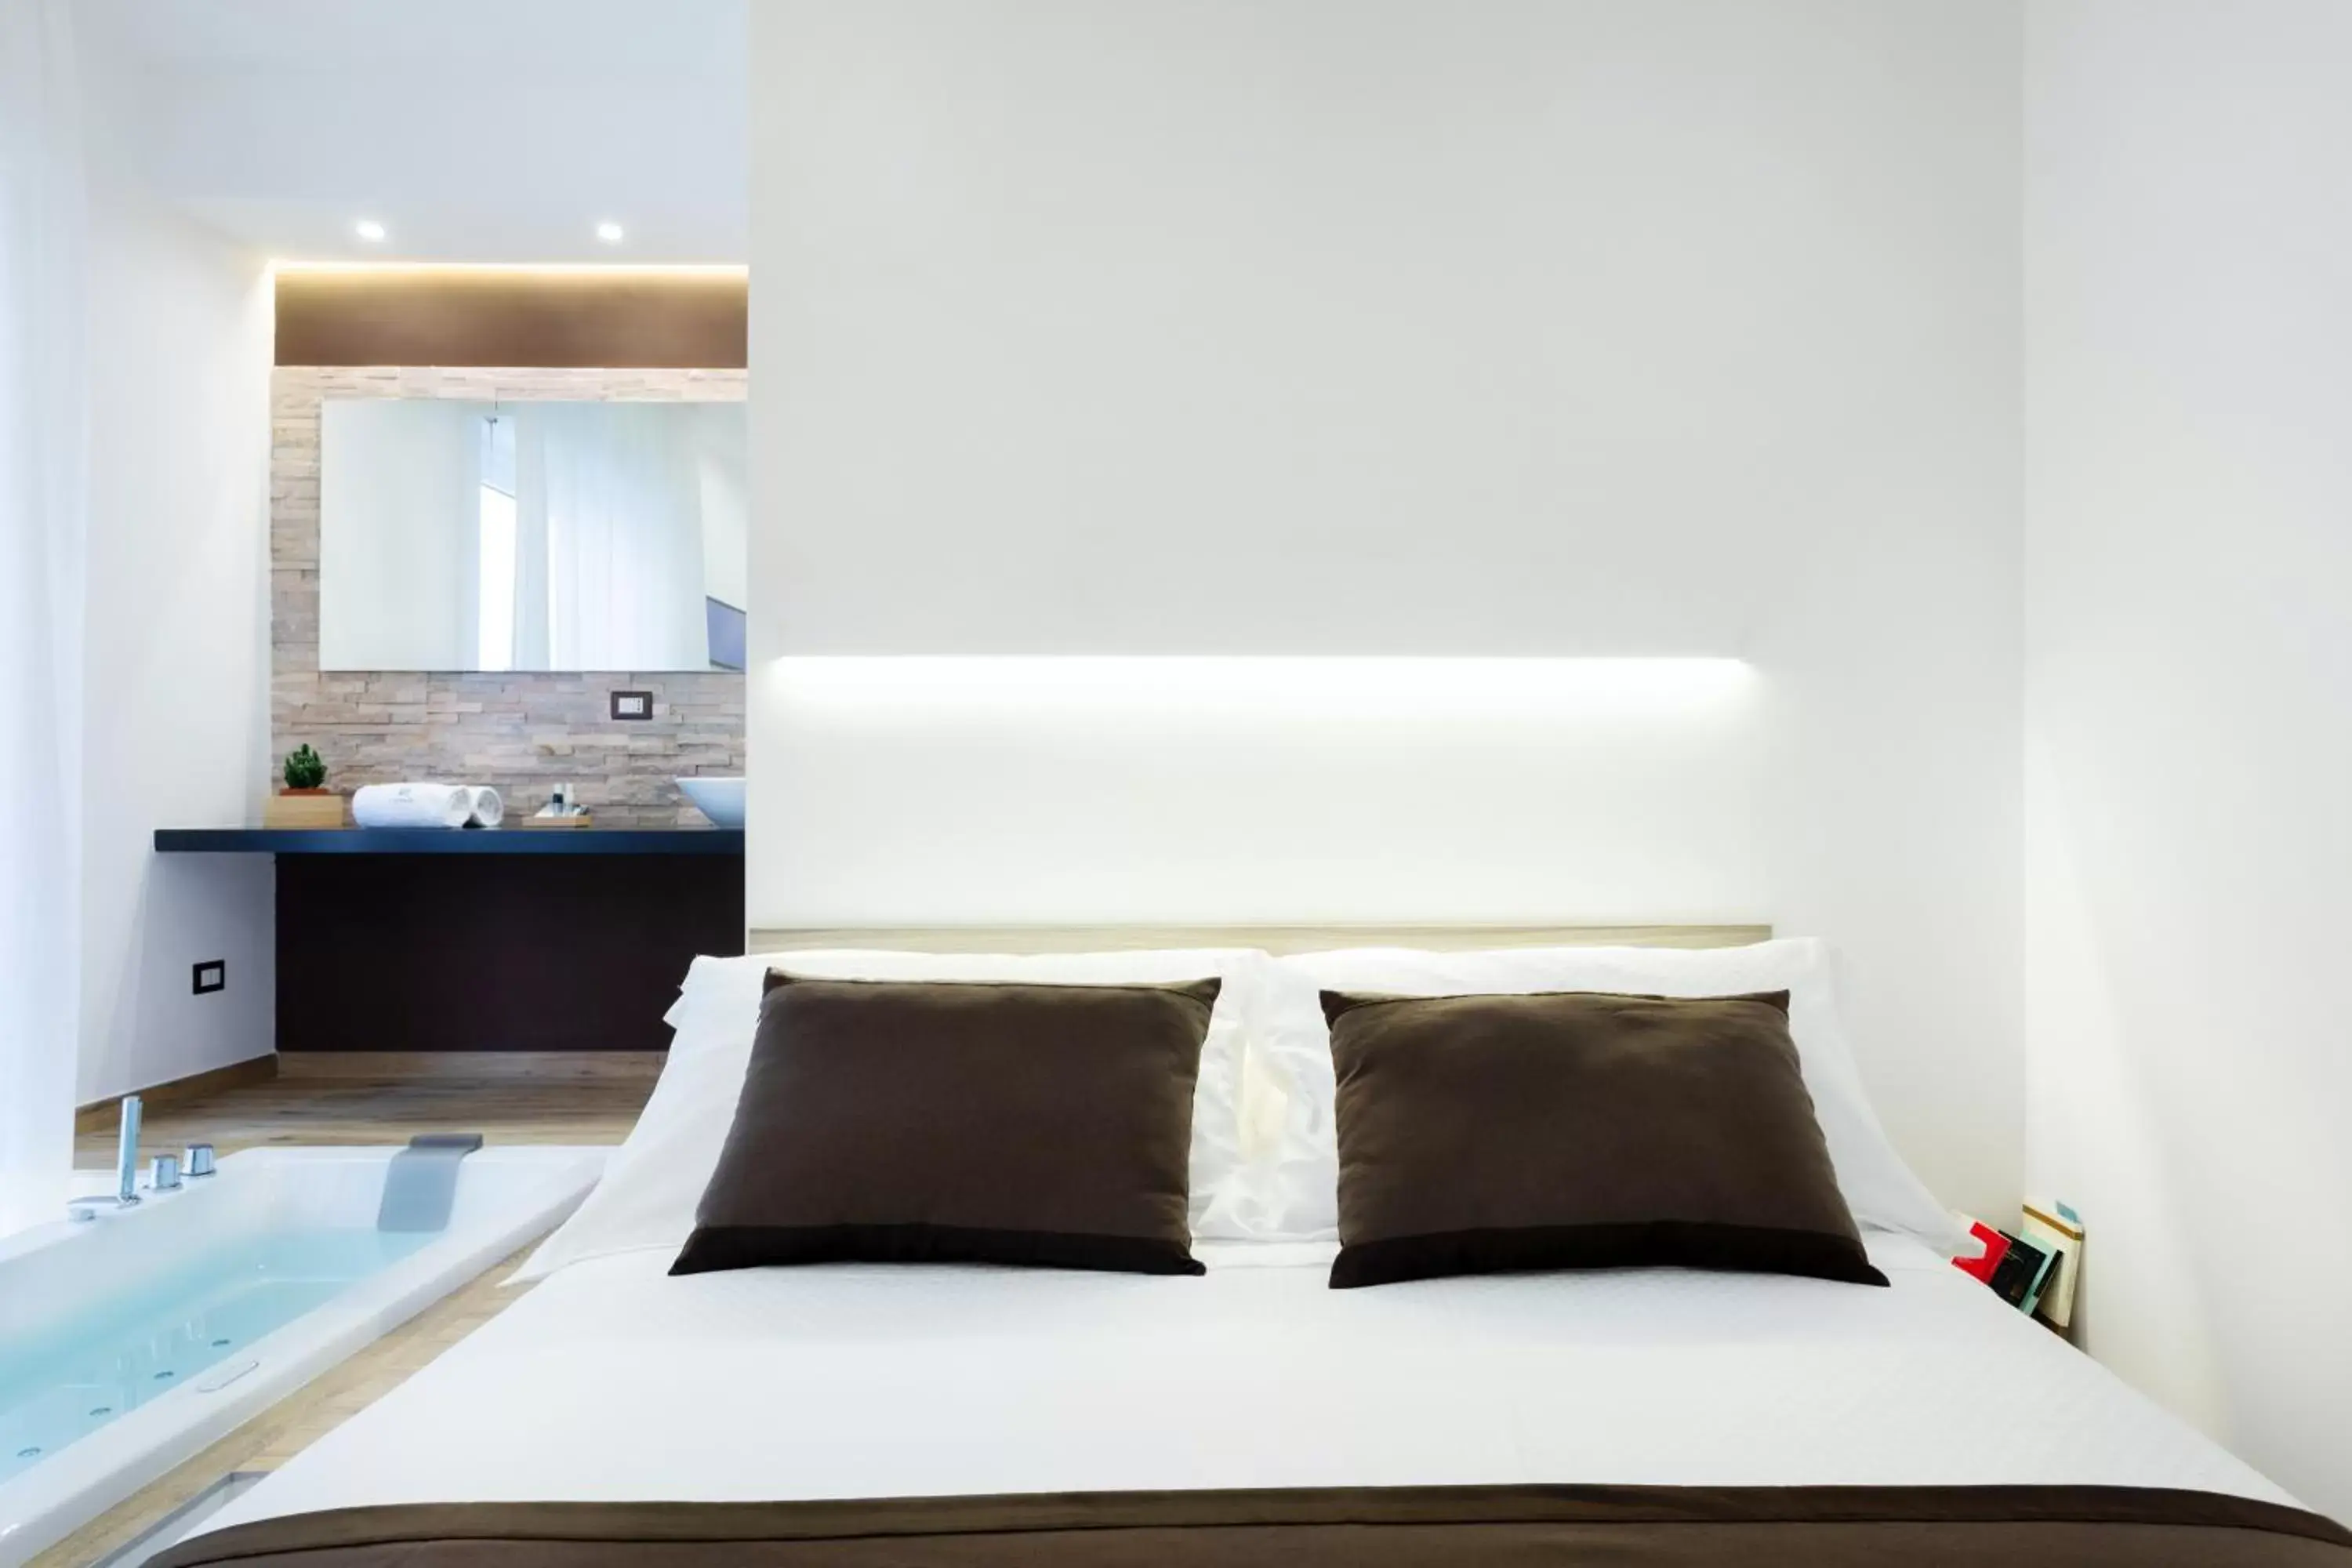 Hot Tub, Bed in Lighea aqua suites and breakfast